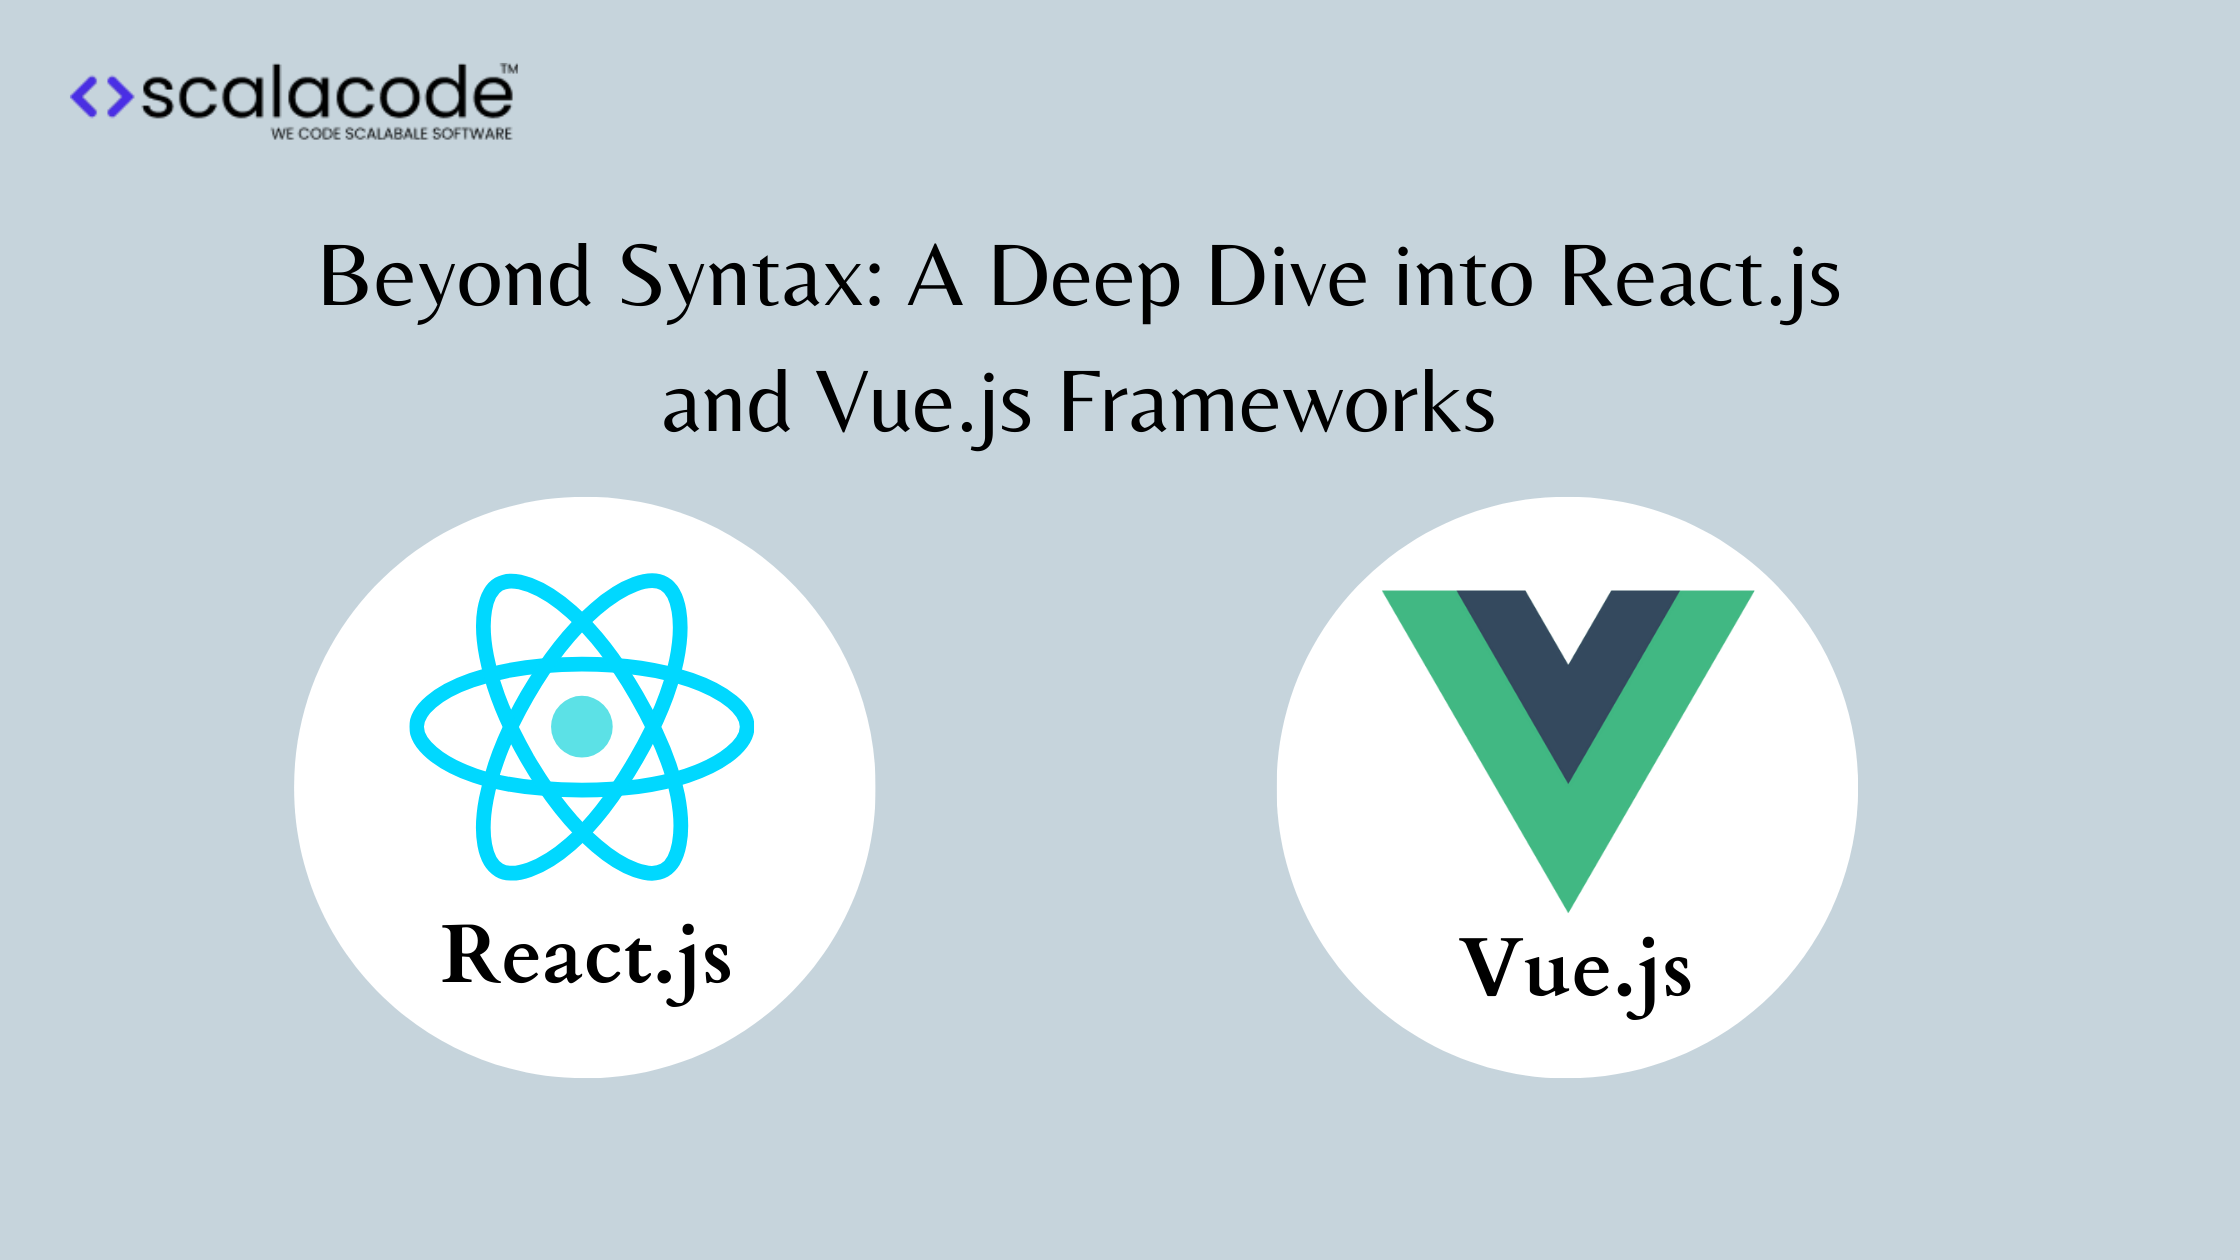 Beyond Syntax: A Deep Dive into React.js and Vue.js Frameworks